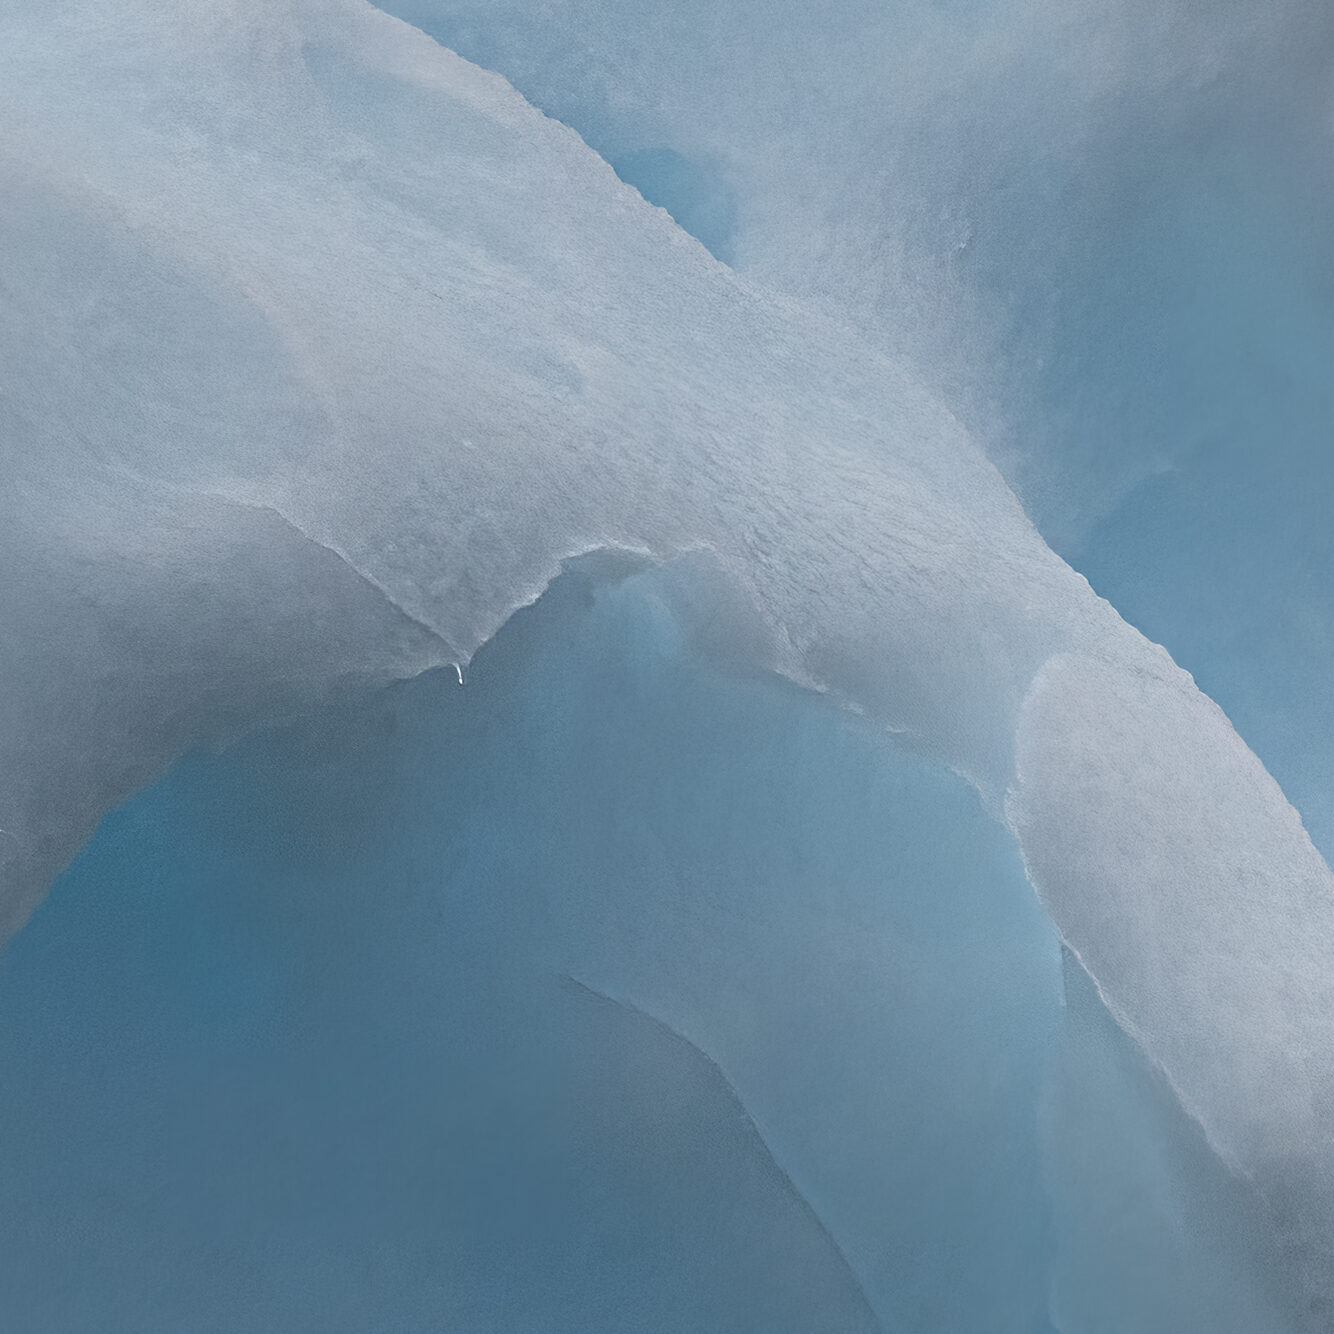 Vicky Stromee, "Antarctic Ice 18," digital capture